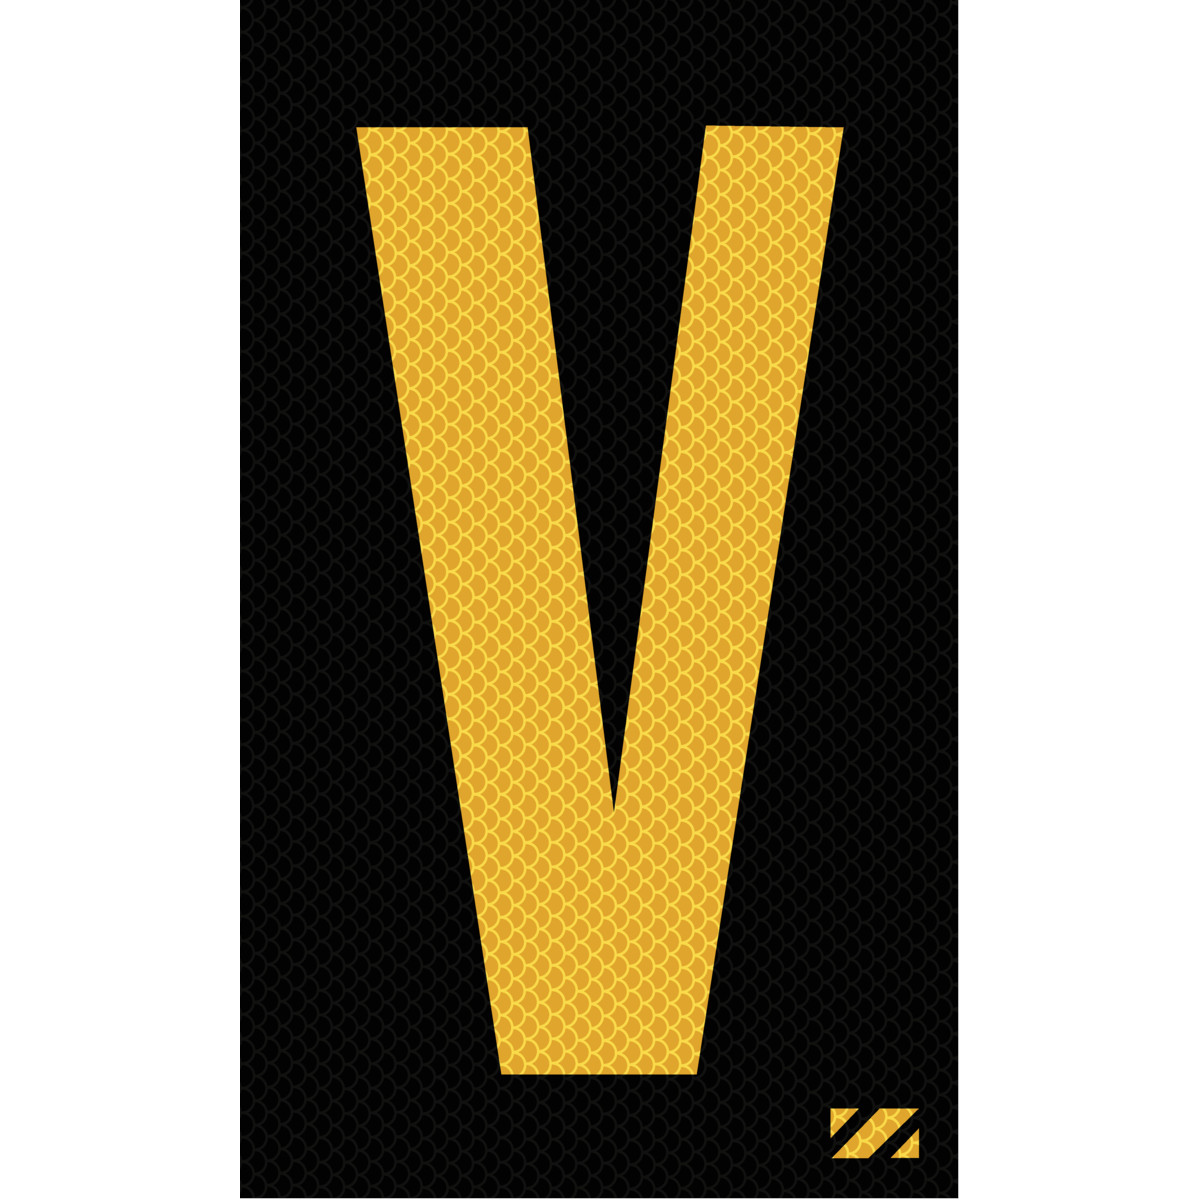 2" Yellow on Black High Intensity Reflective "V"